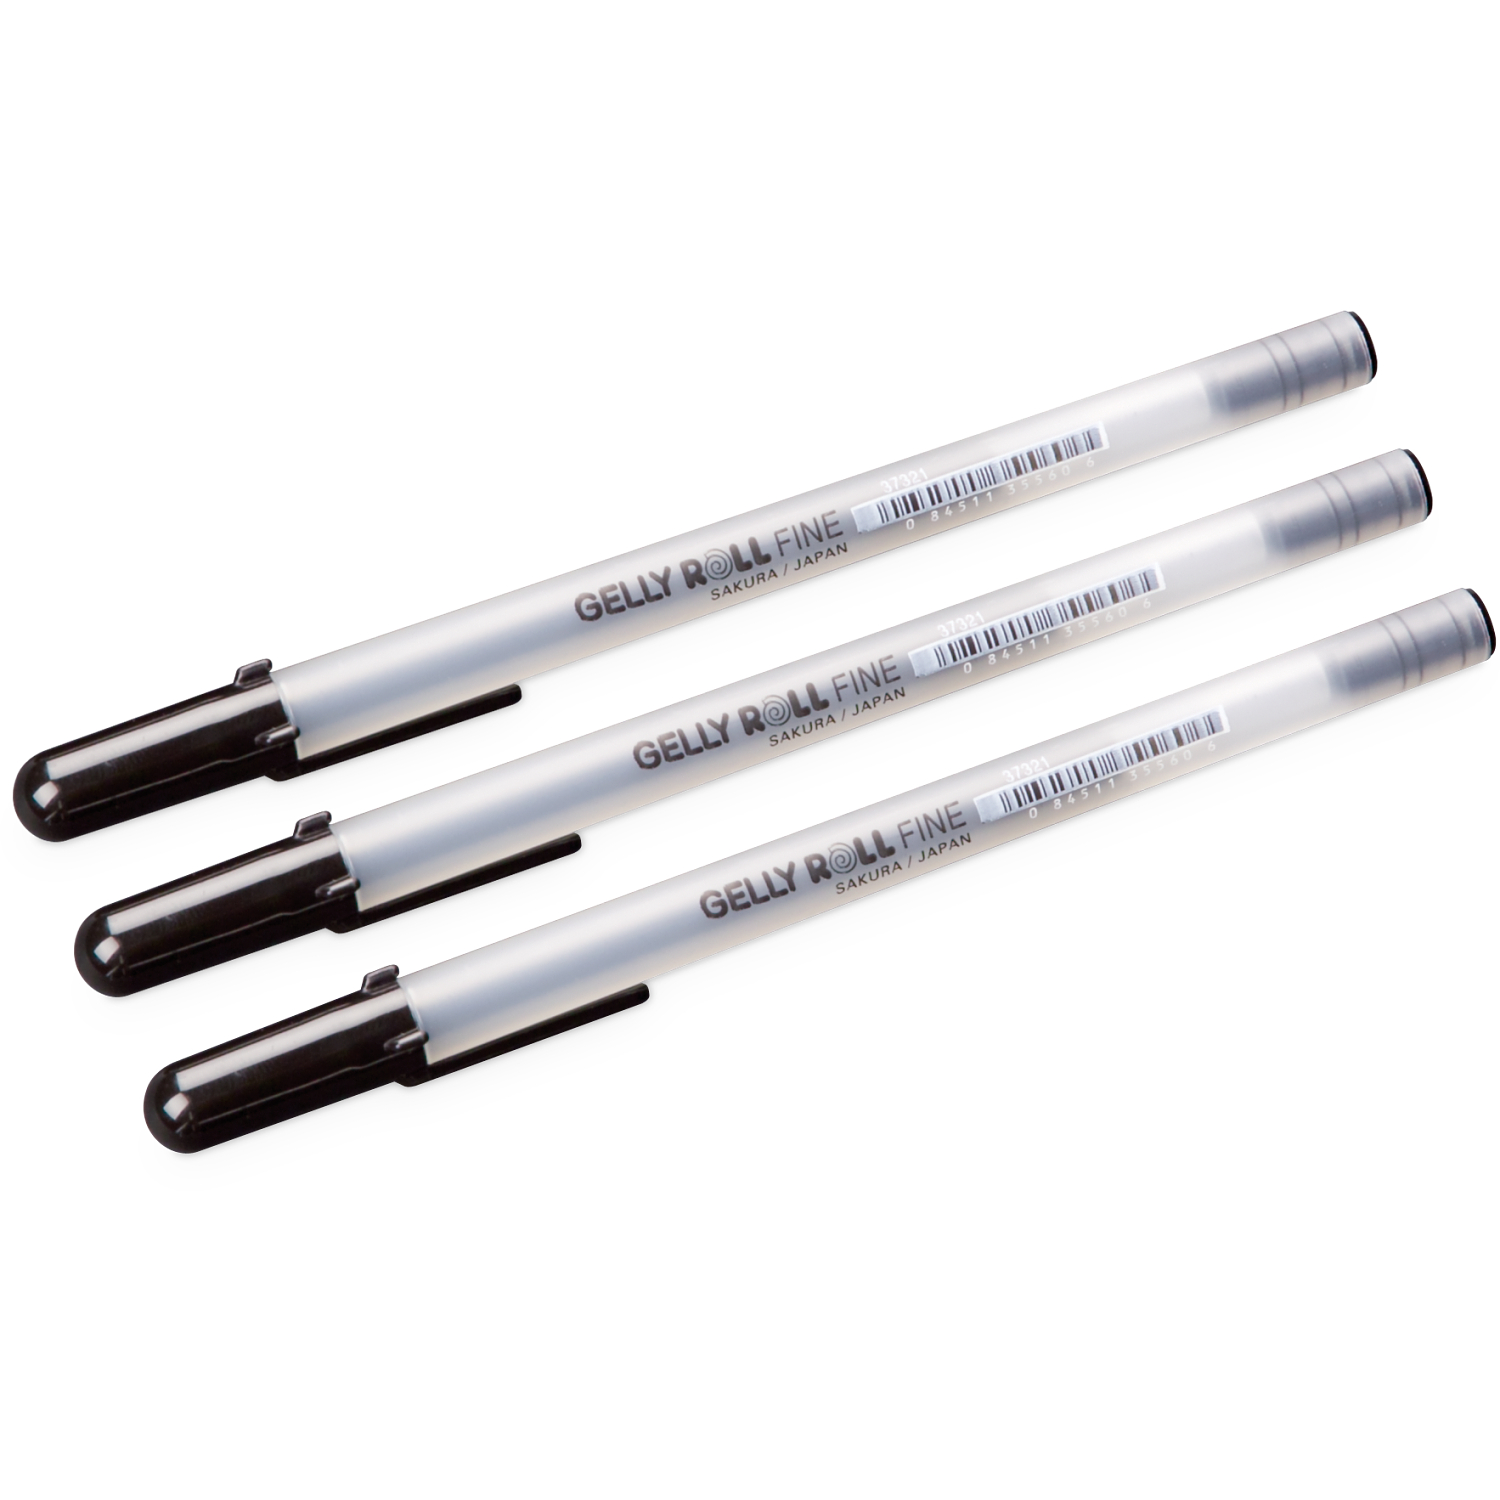 Sakura Gelly Roll Classic Pens are Waterproof & Chemical Resistant